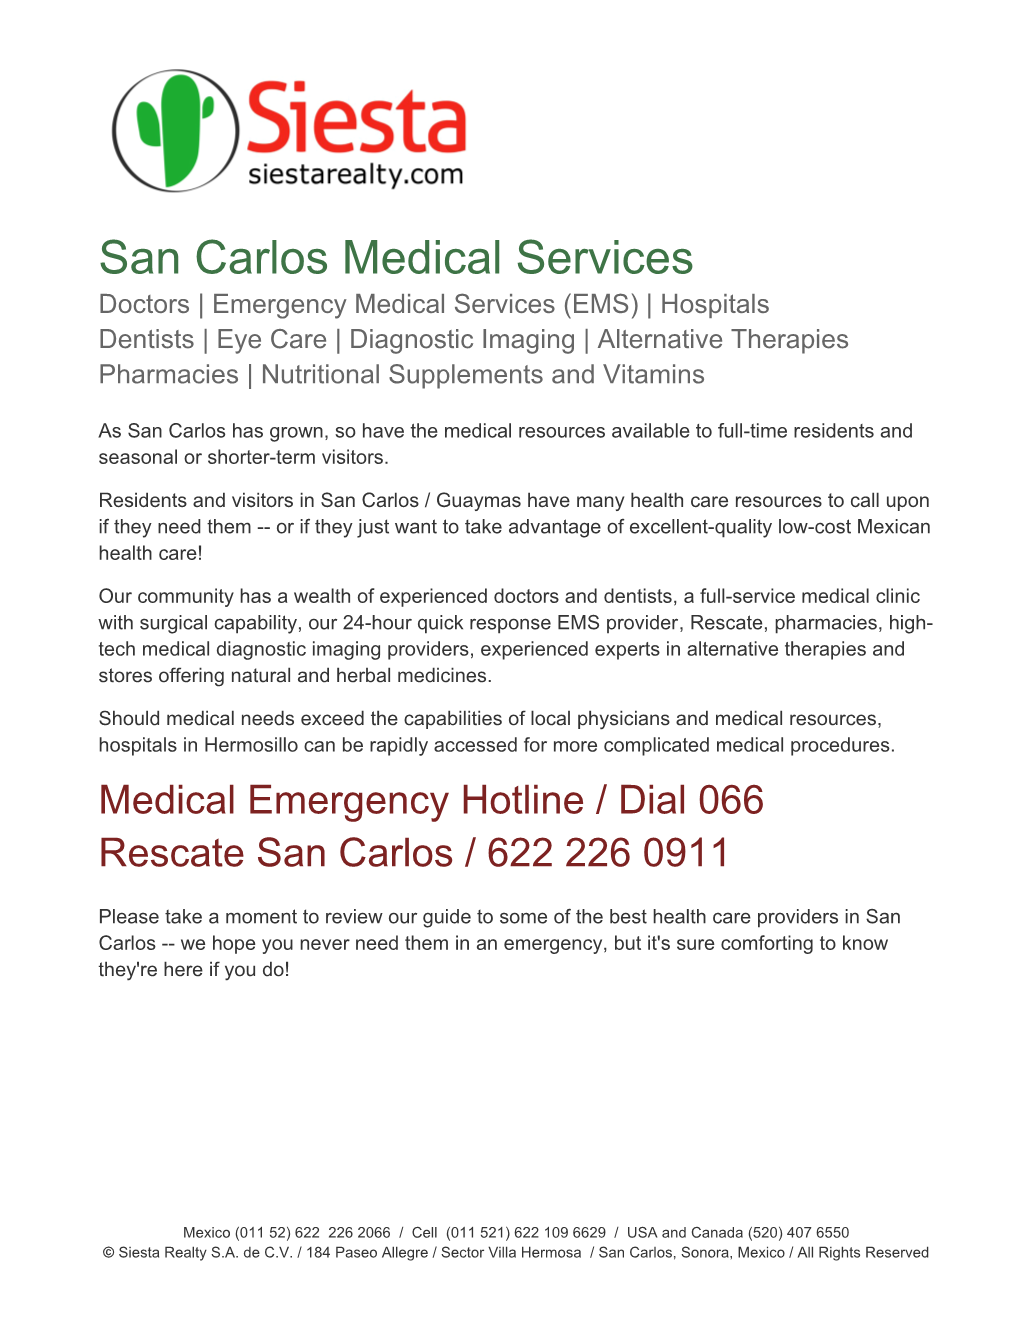 San Carlos / Guaymas Doctors and Medical Services